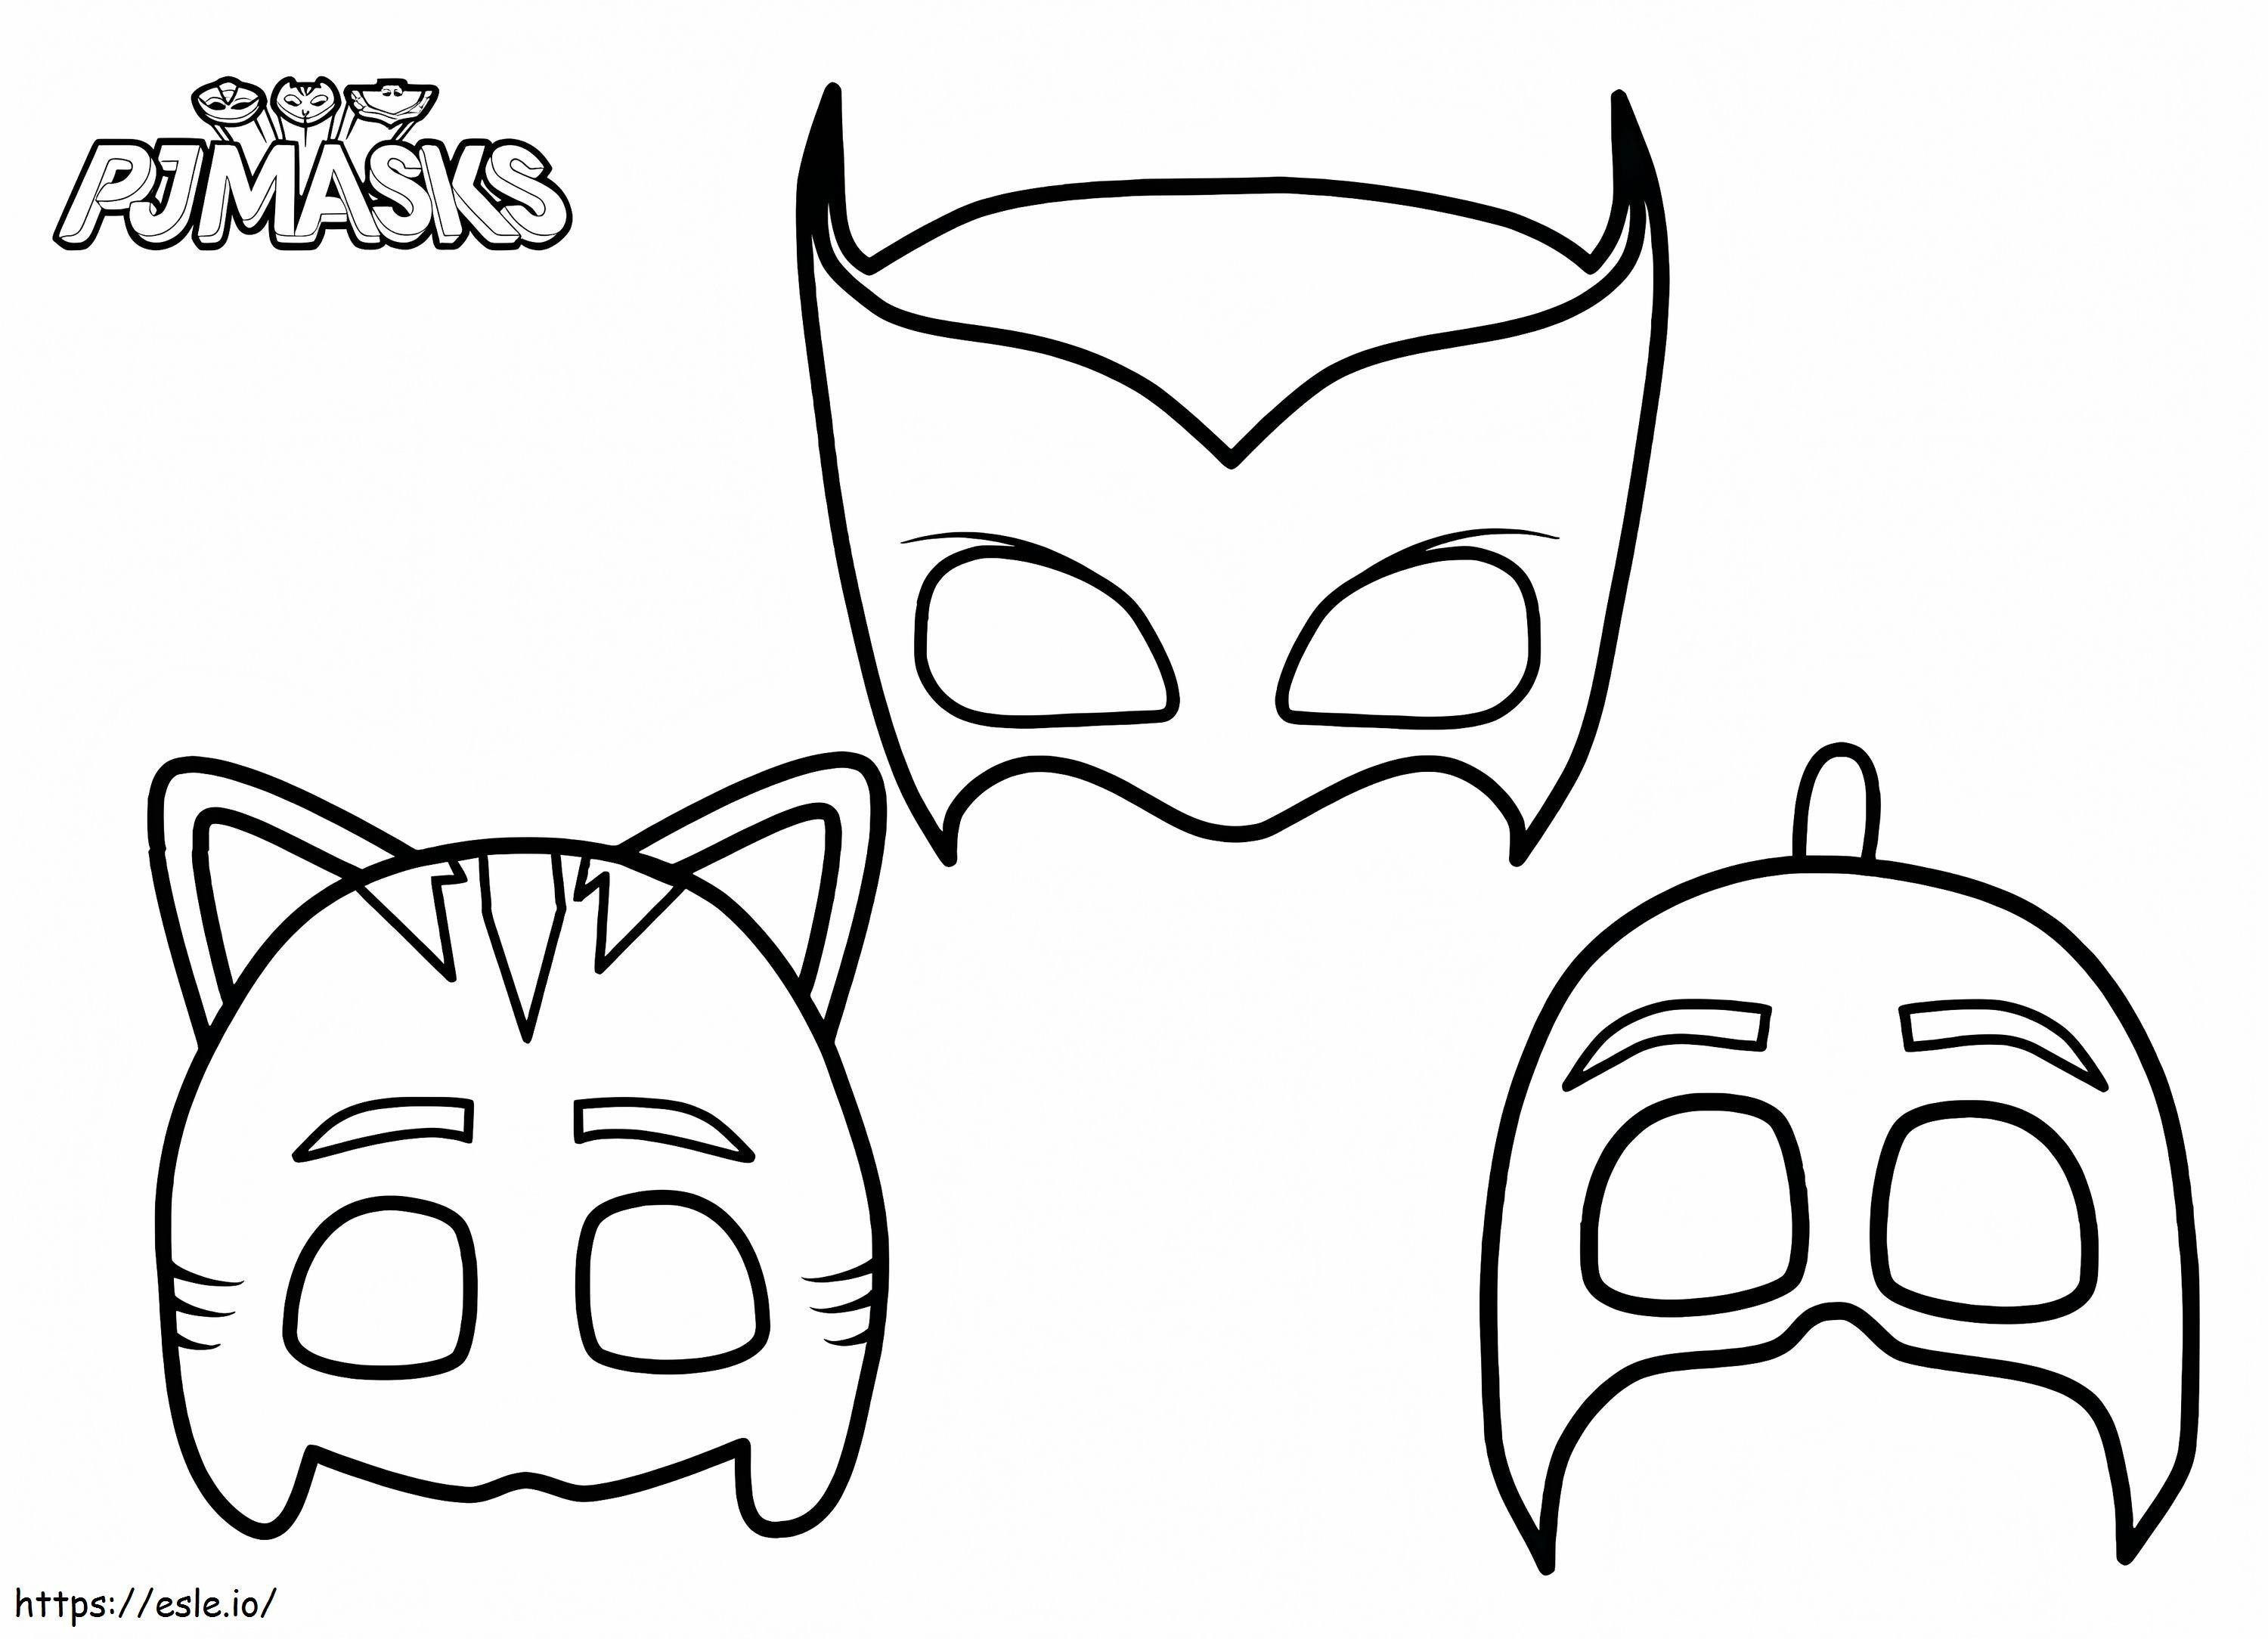 PJ Masks 1 coloring page